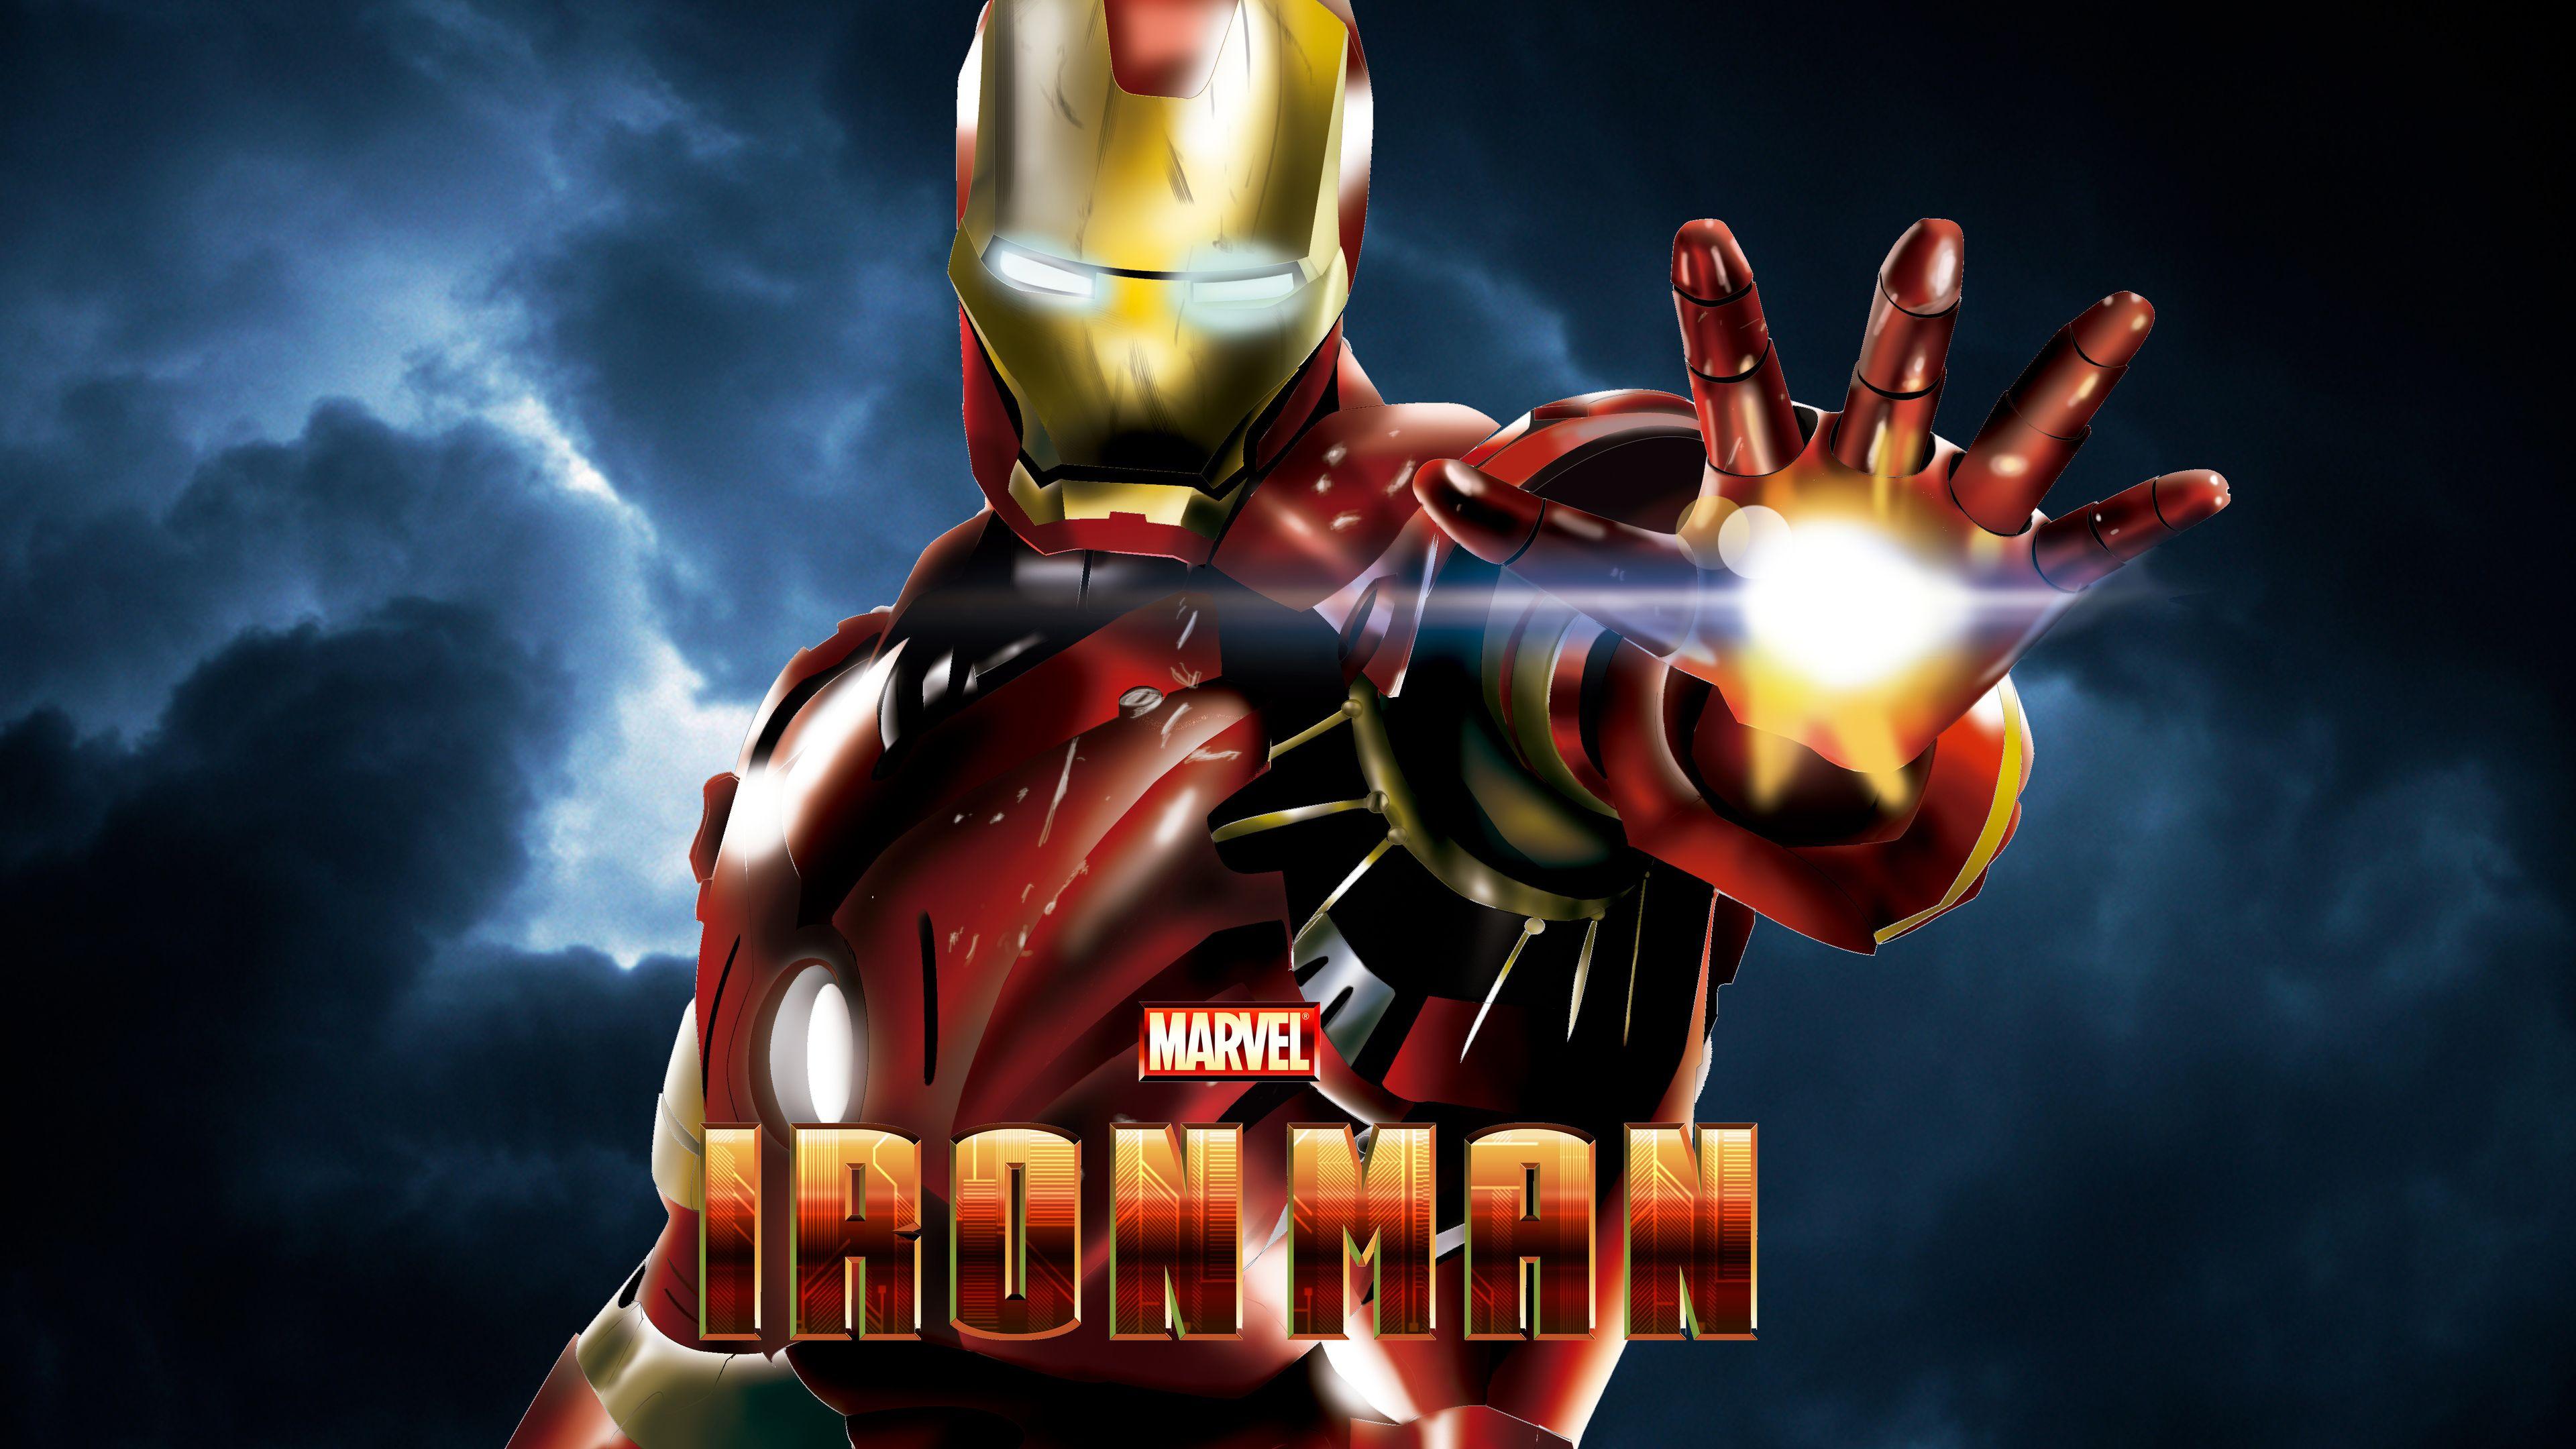 Iron Man Marvel 4k superheroes wallpaper, iron man wallpaper, hd- wallpaper, wallpaper, artist wallpaper,. Iron man, Iron man wallpaper, Marvel 4k